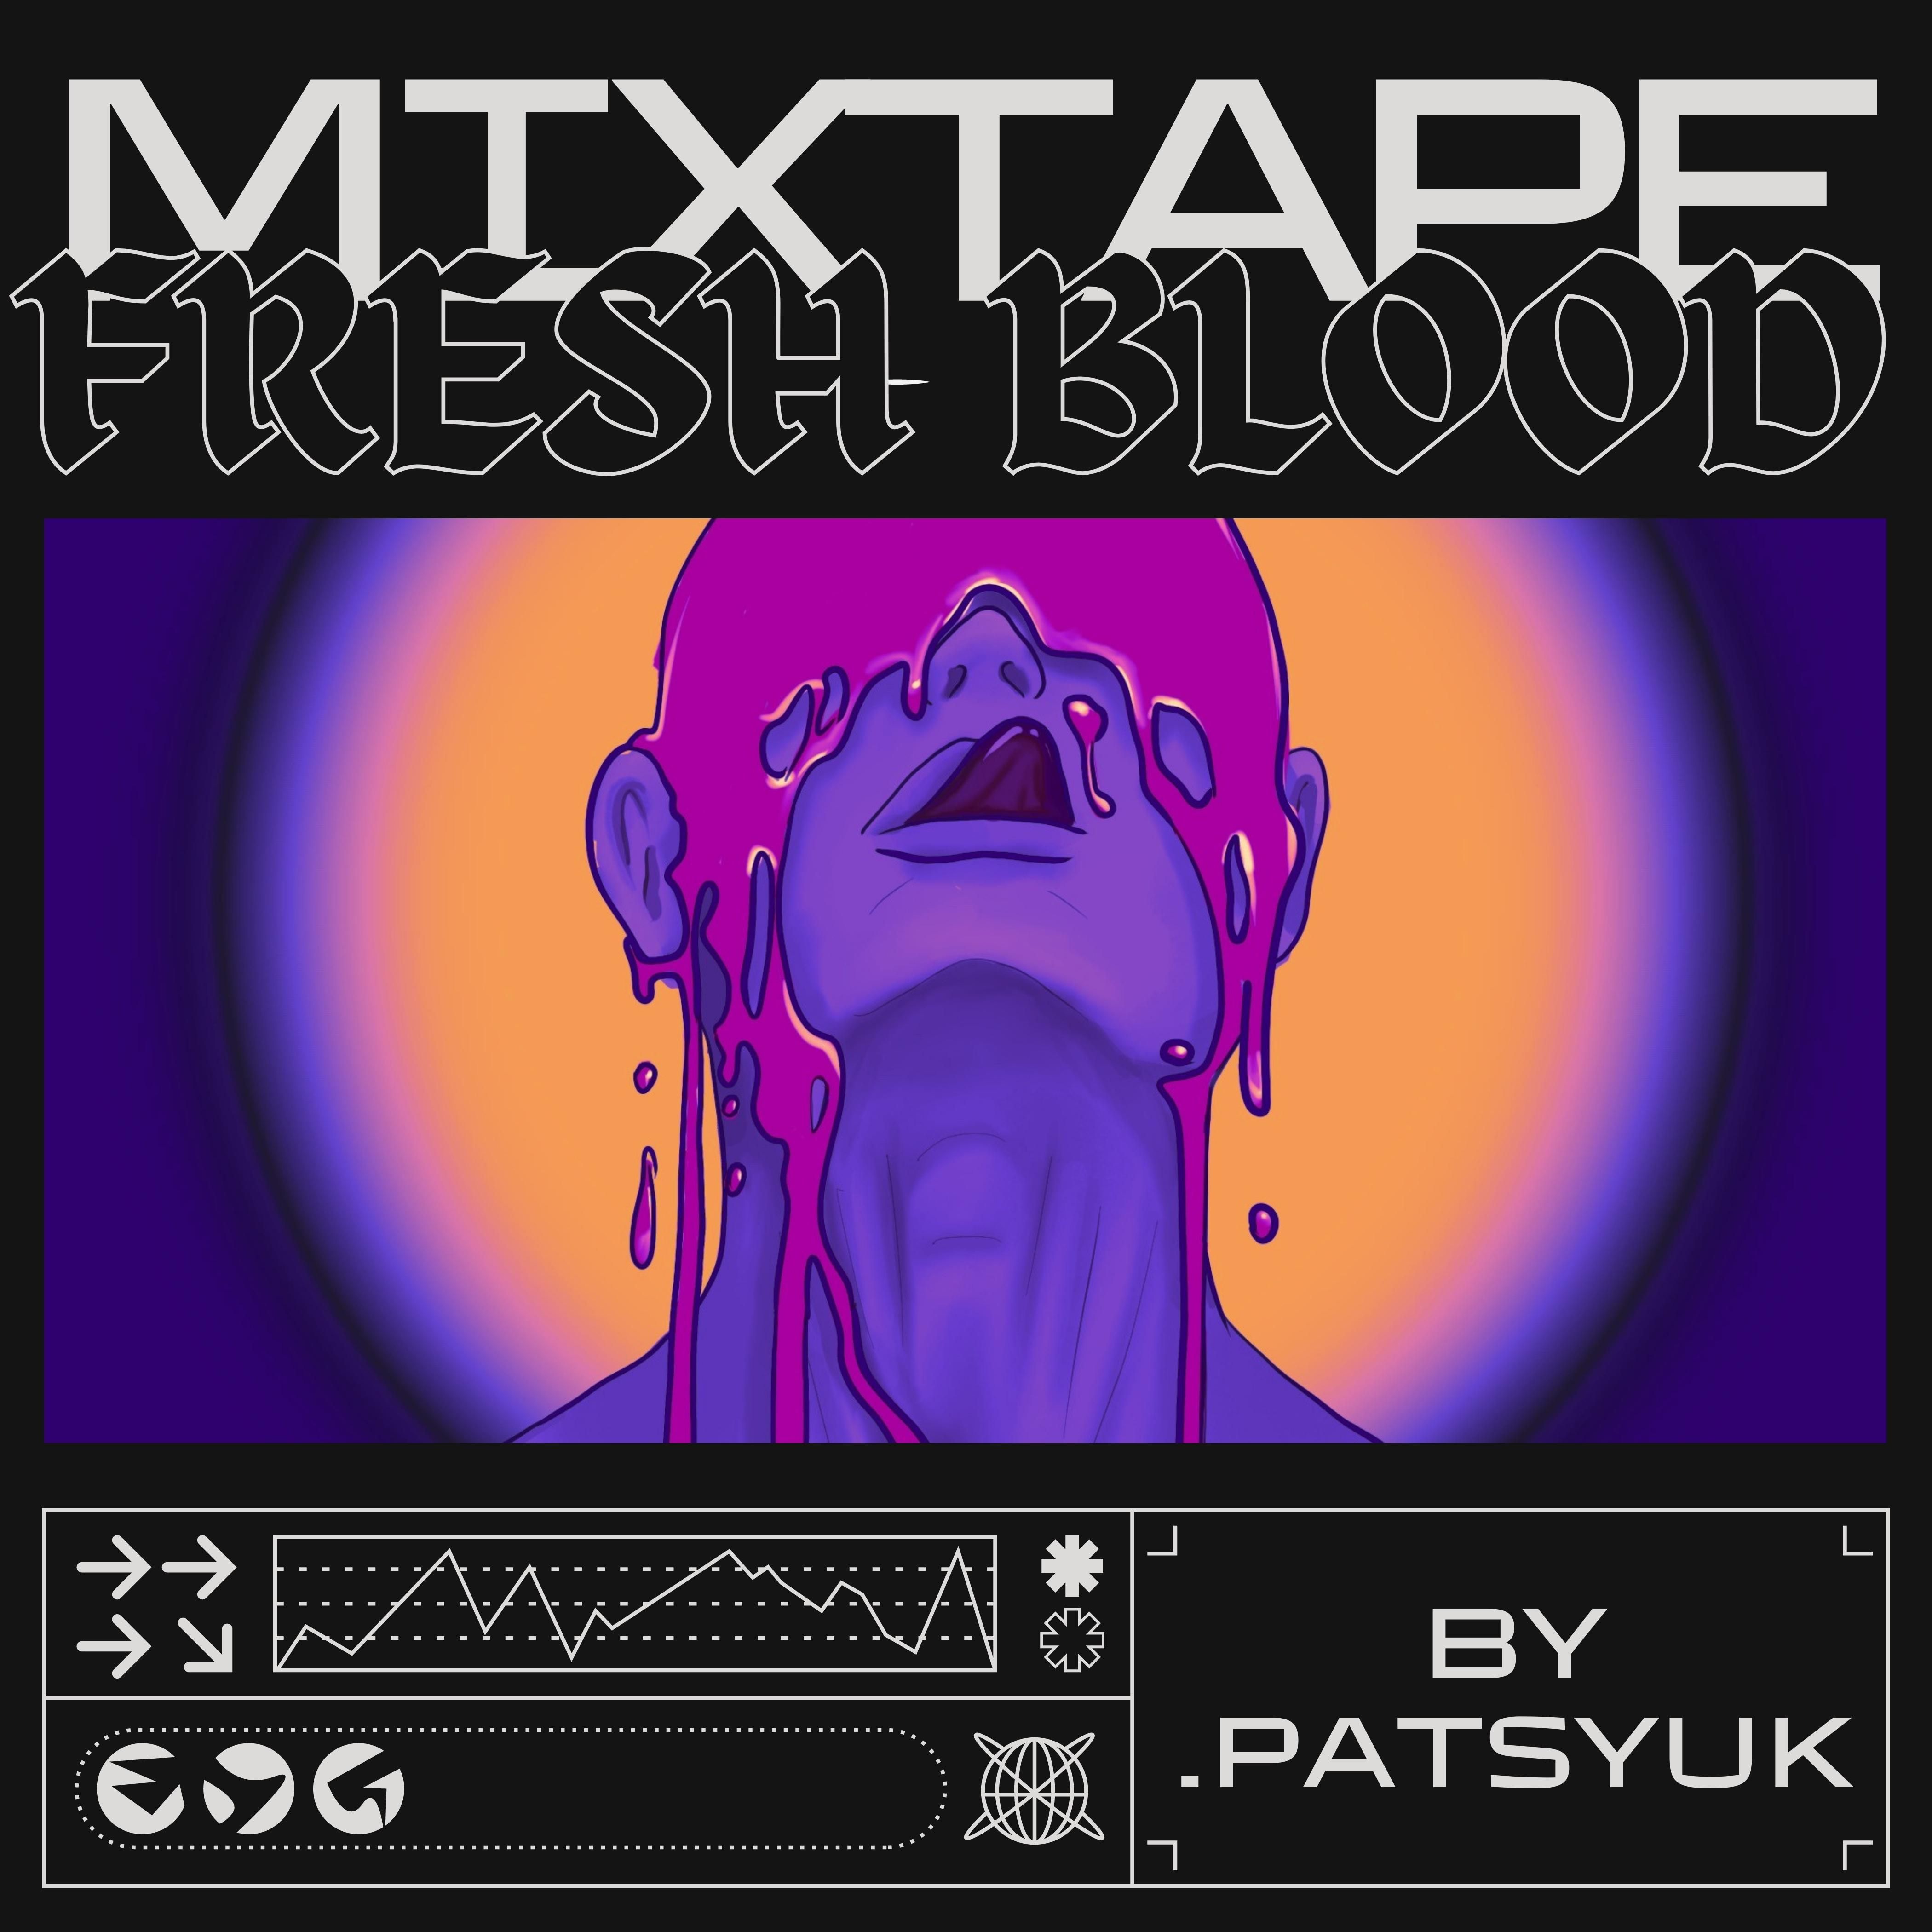 Pobierać Mixtape "FRESH BLOOD"